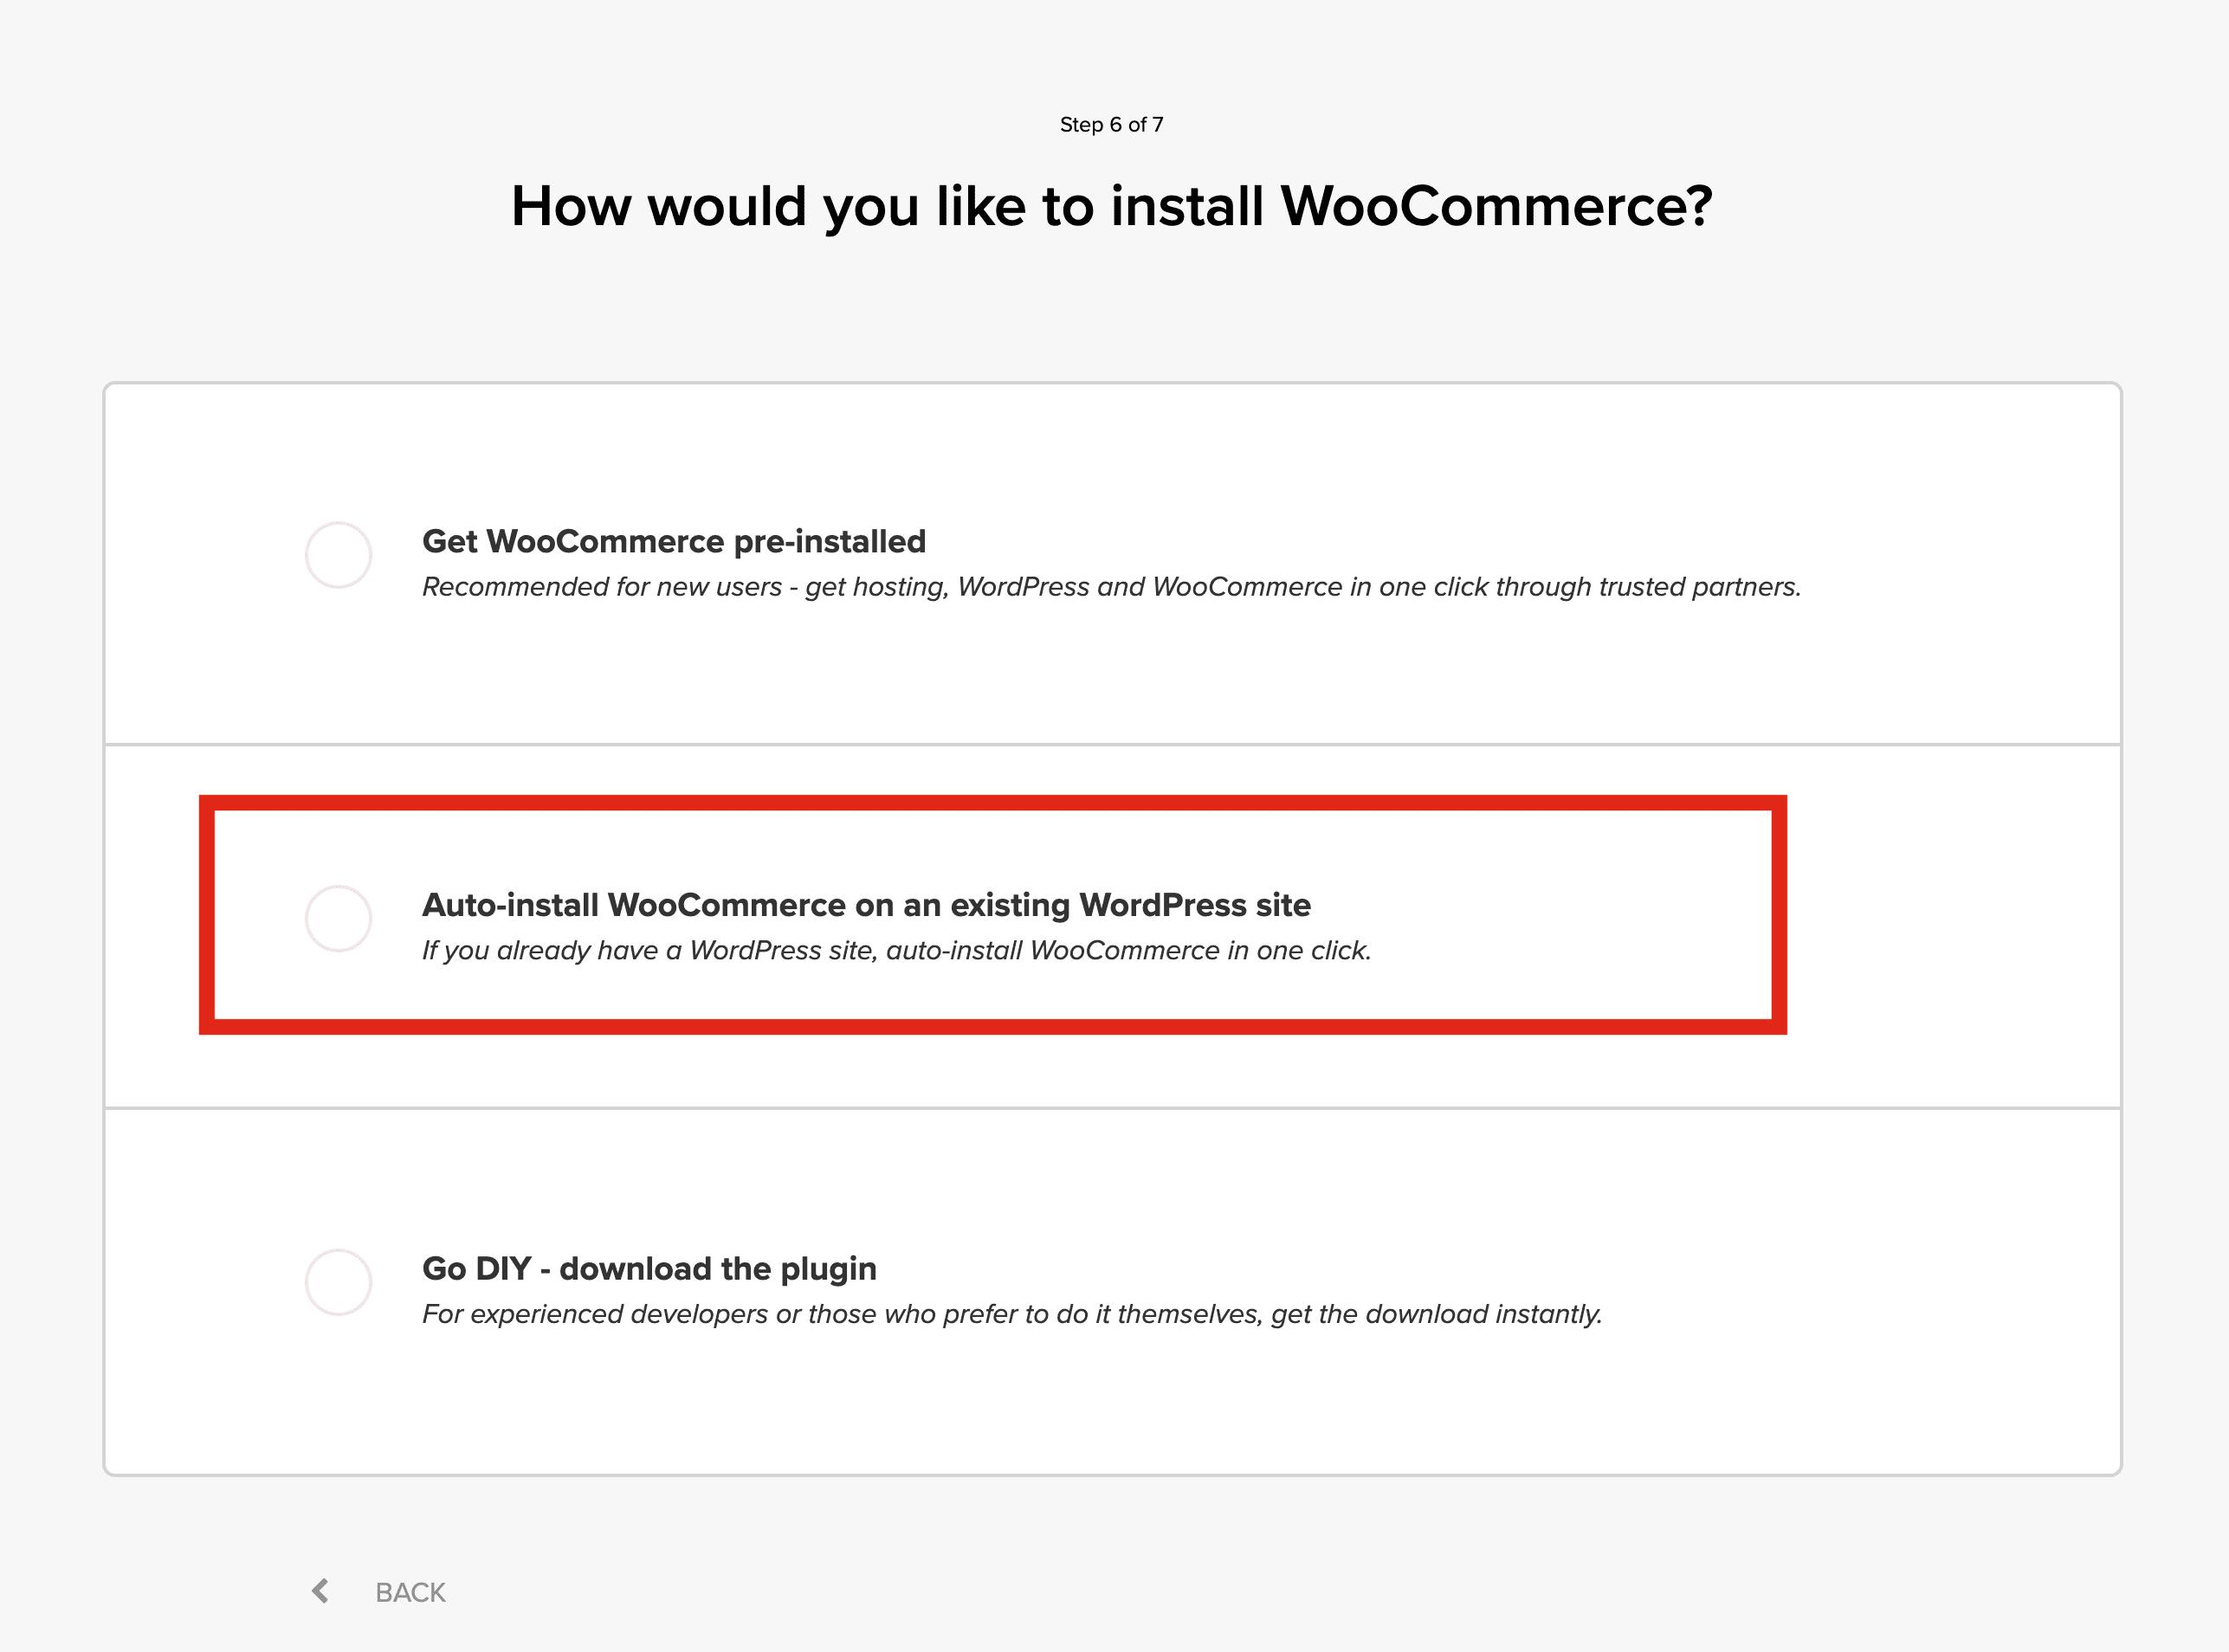 Auto-install WooCommerce